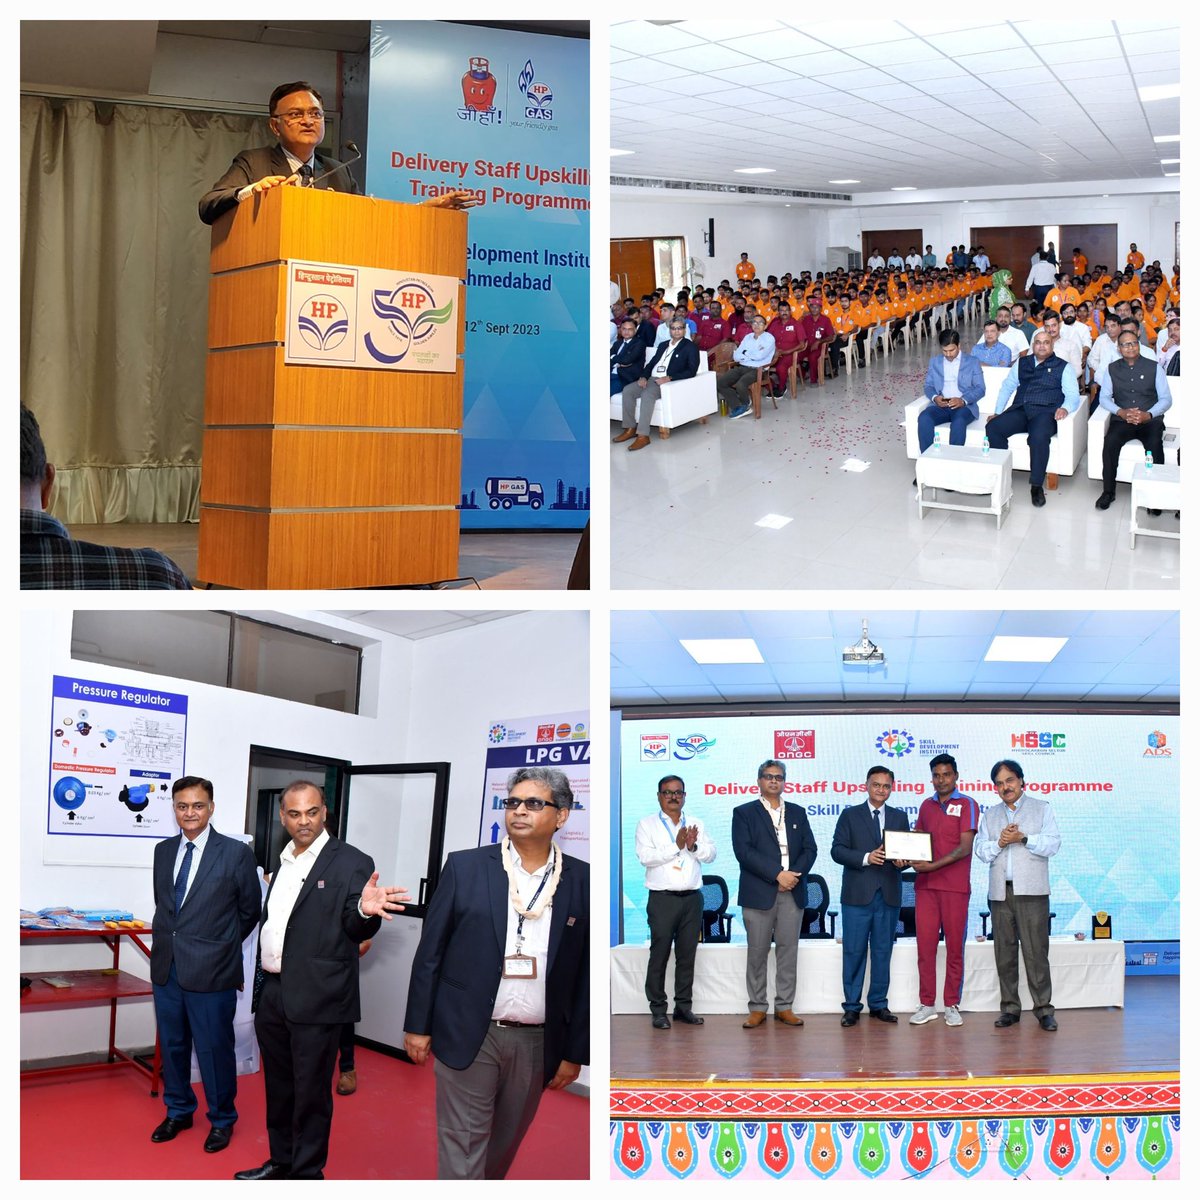 @NwzLpg committed to train Delivery staff. @HPCL ED -LPG @anujjain1906 inaugurated #Samarth2.0 at SDI Ahmedabad @MSDESkillIndia @Hydrocarbon_SSC @nalli_srinivas